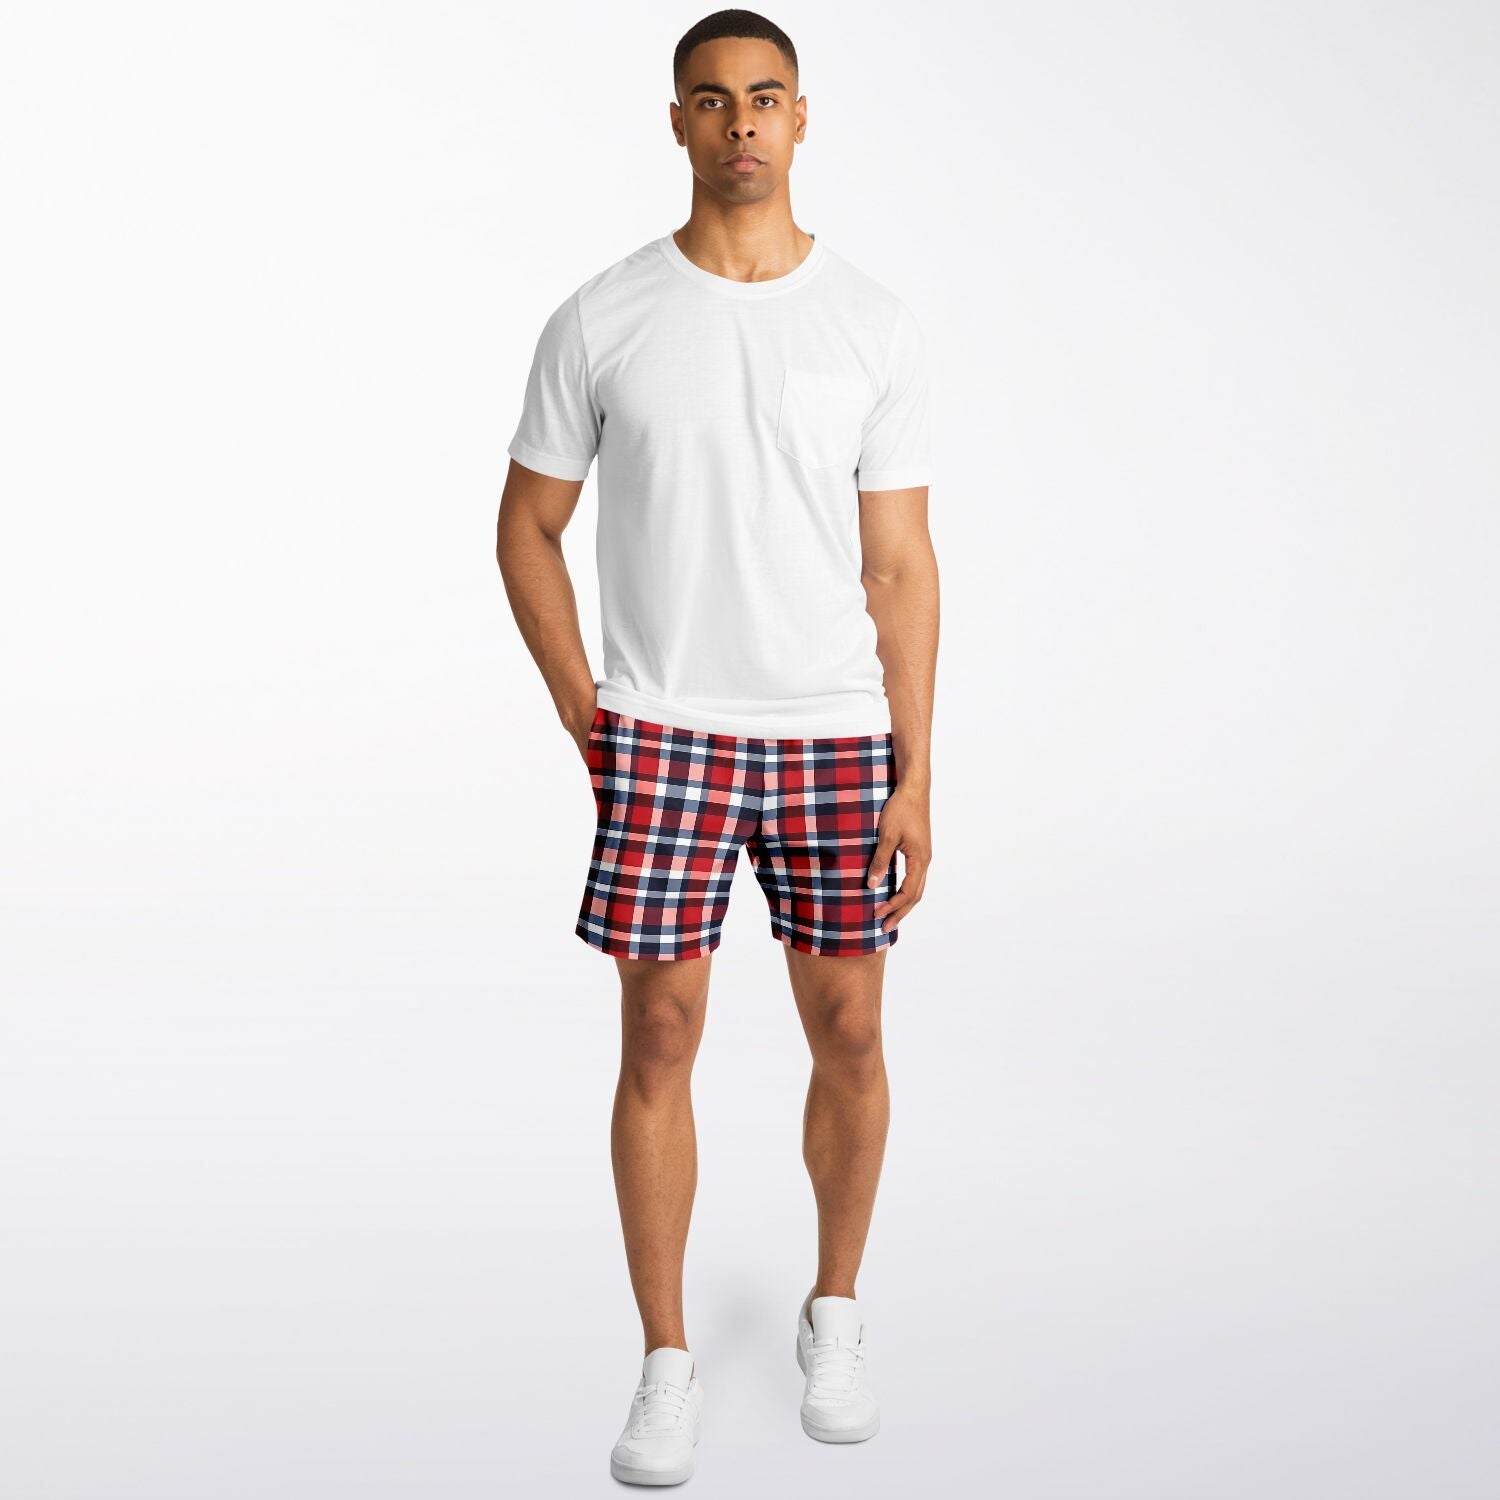 Buffalo Plaid Men Shorts, Red White Blue Tartan Check Beach Casual with Pockets 7 Inch Inseam Drawstring Casual Designer Summer Starcove Fashion